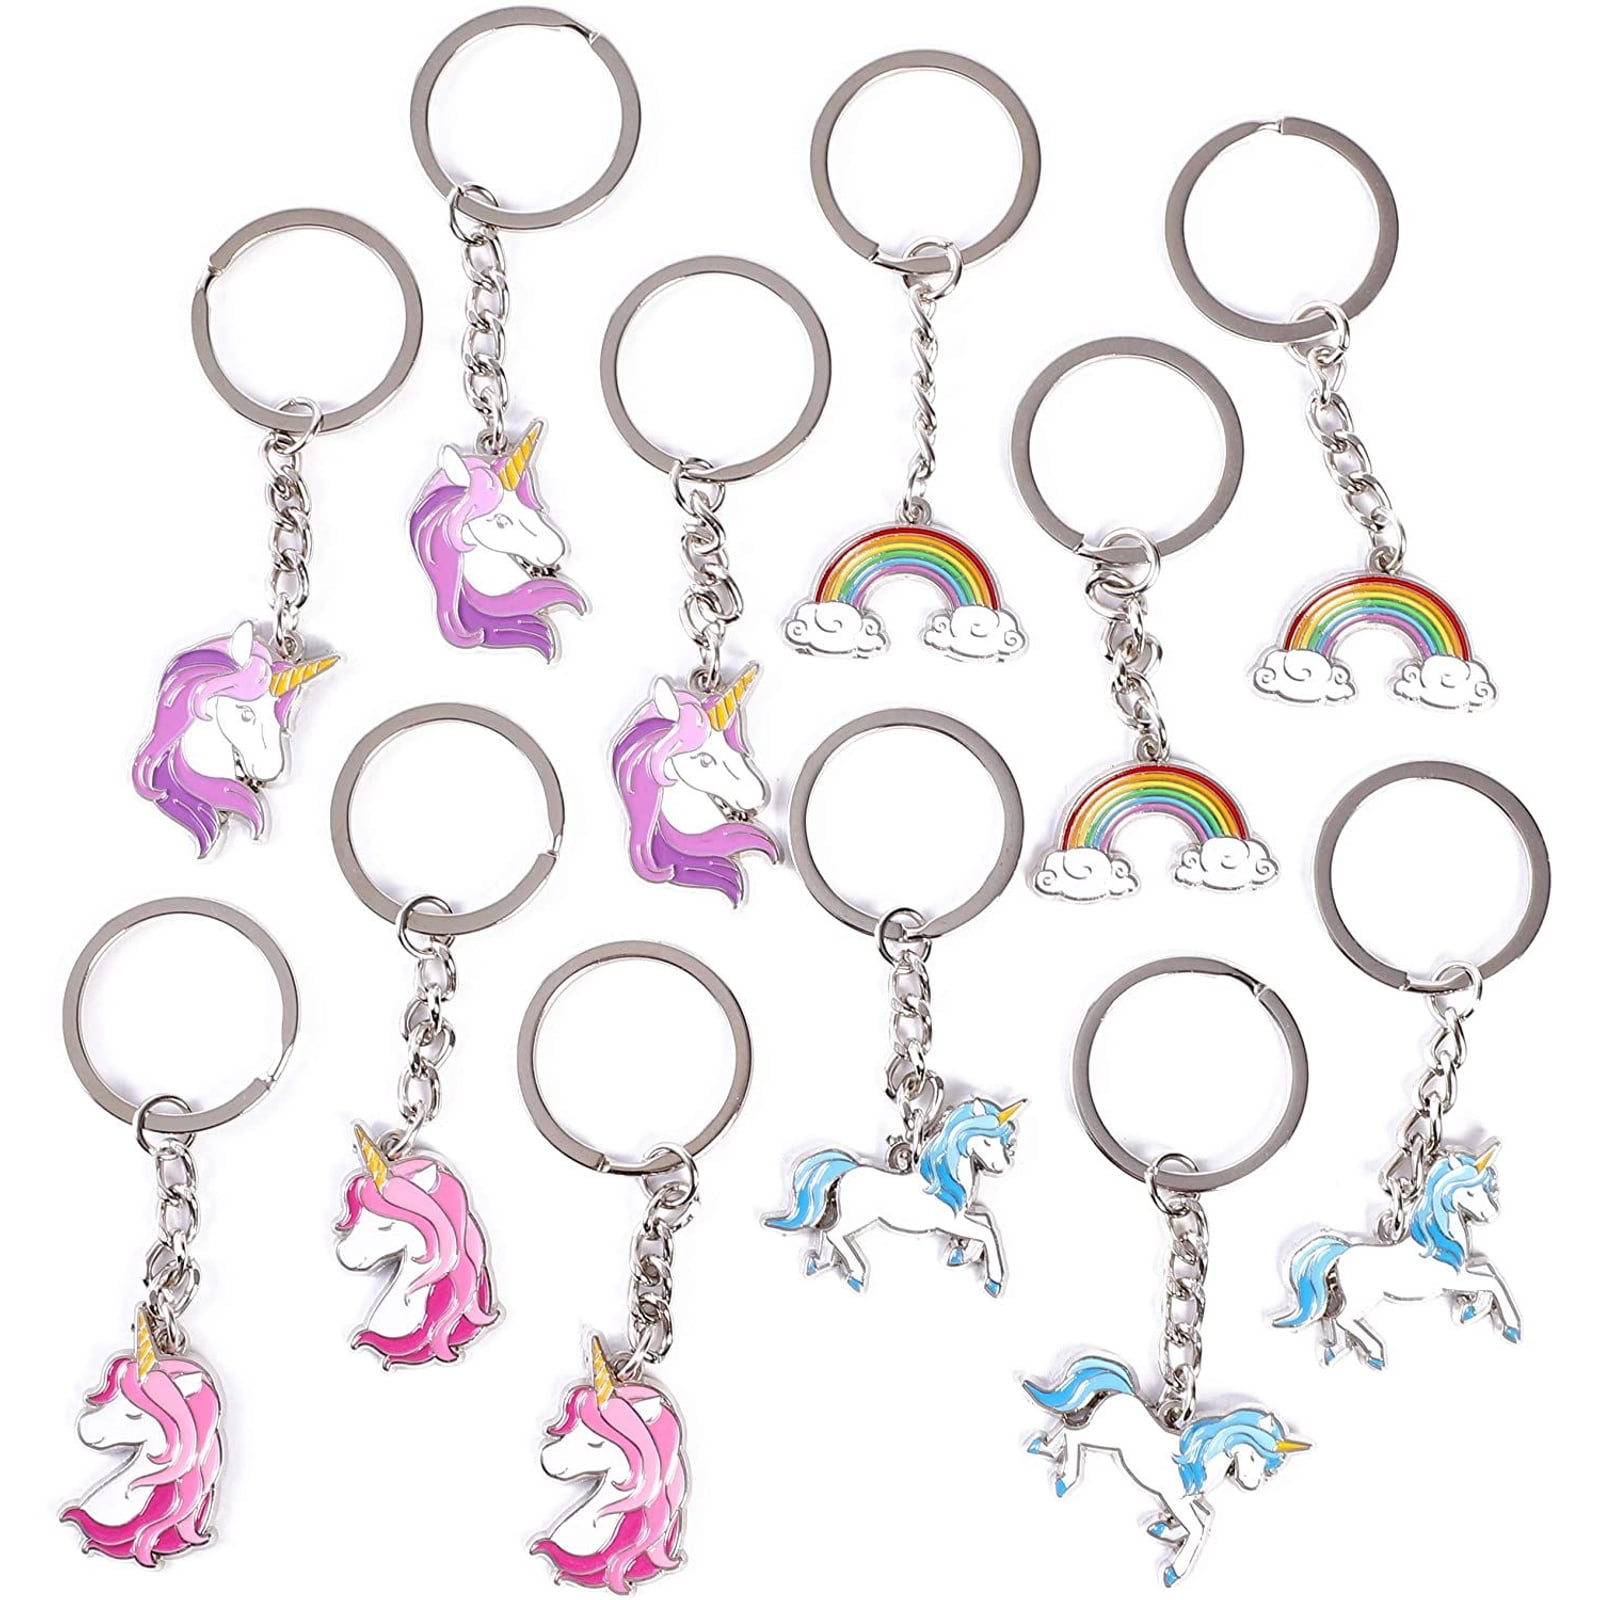 PVC Silicone Alphabet Letters Unicorn Pendant Keychain Keyring Craft Girl Gifts 